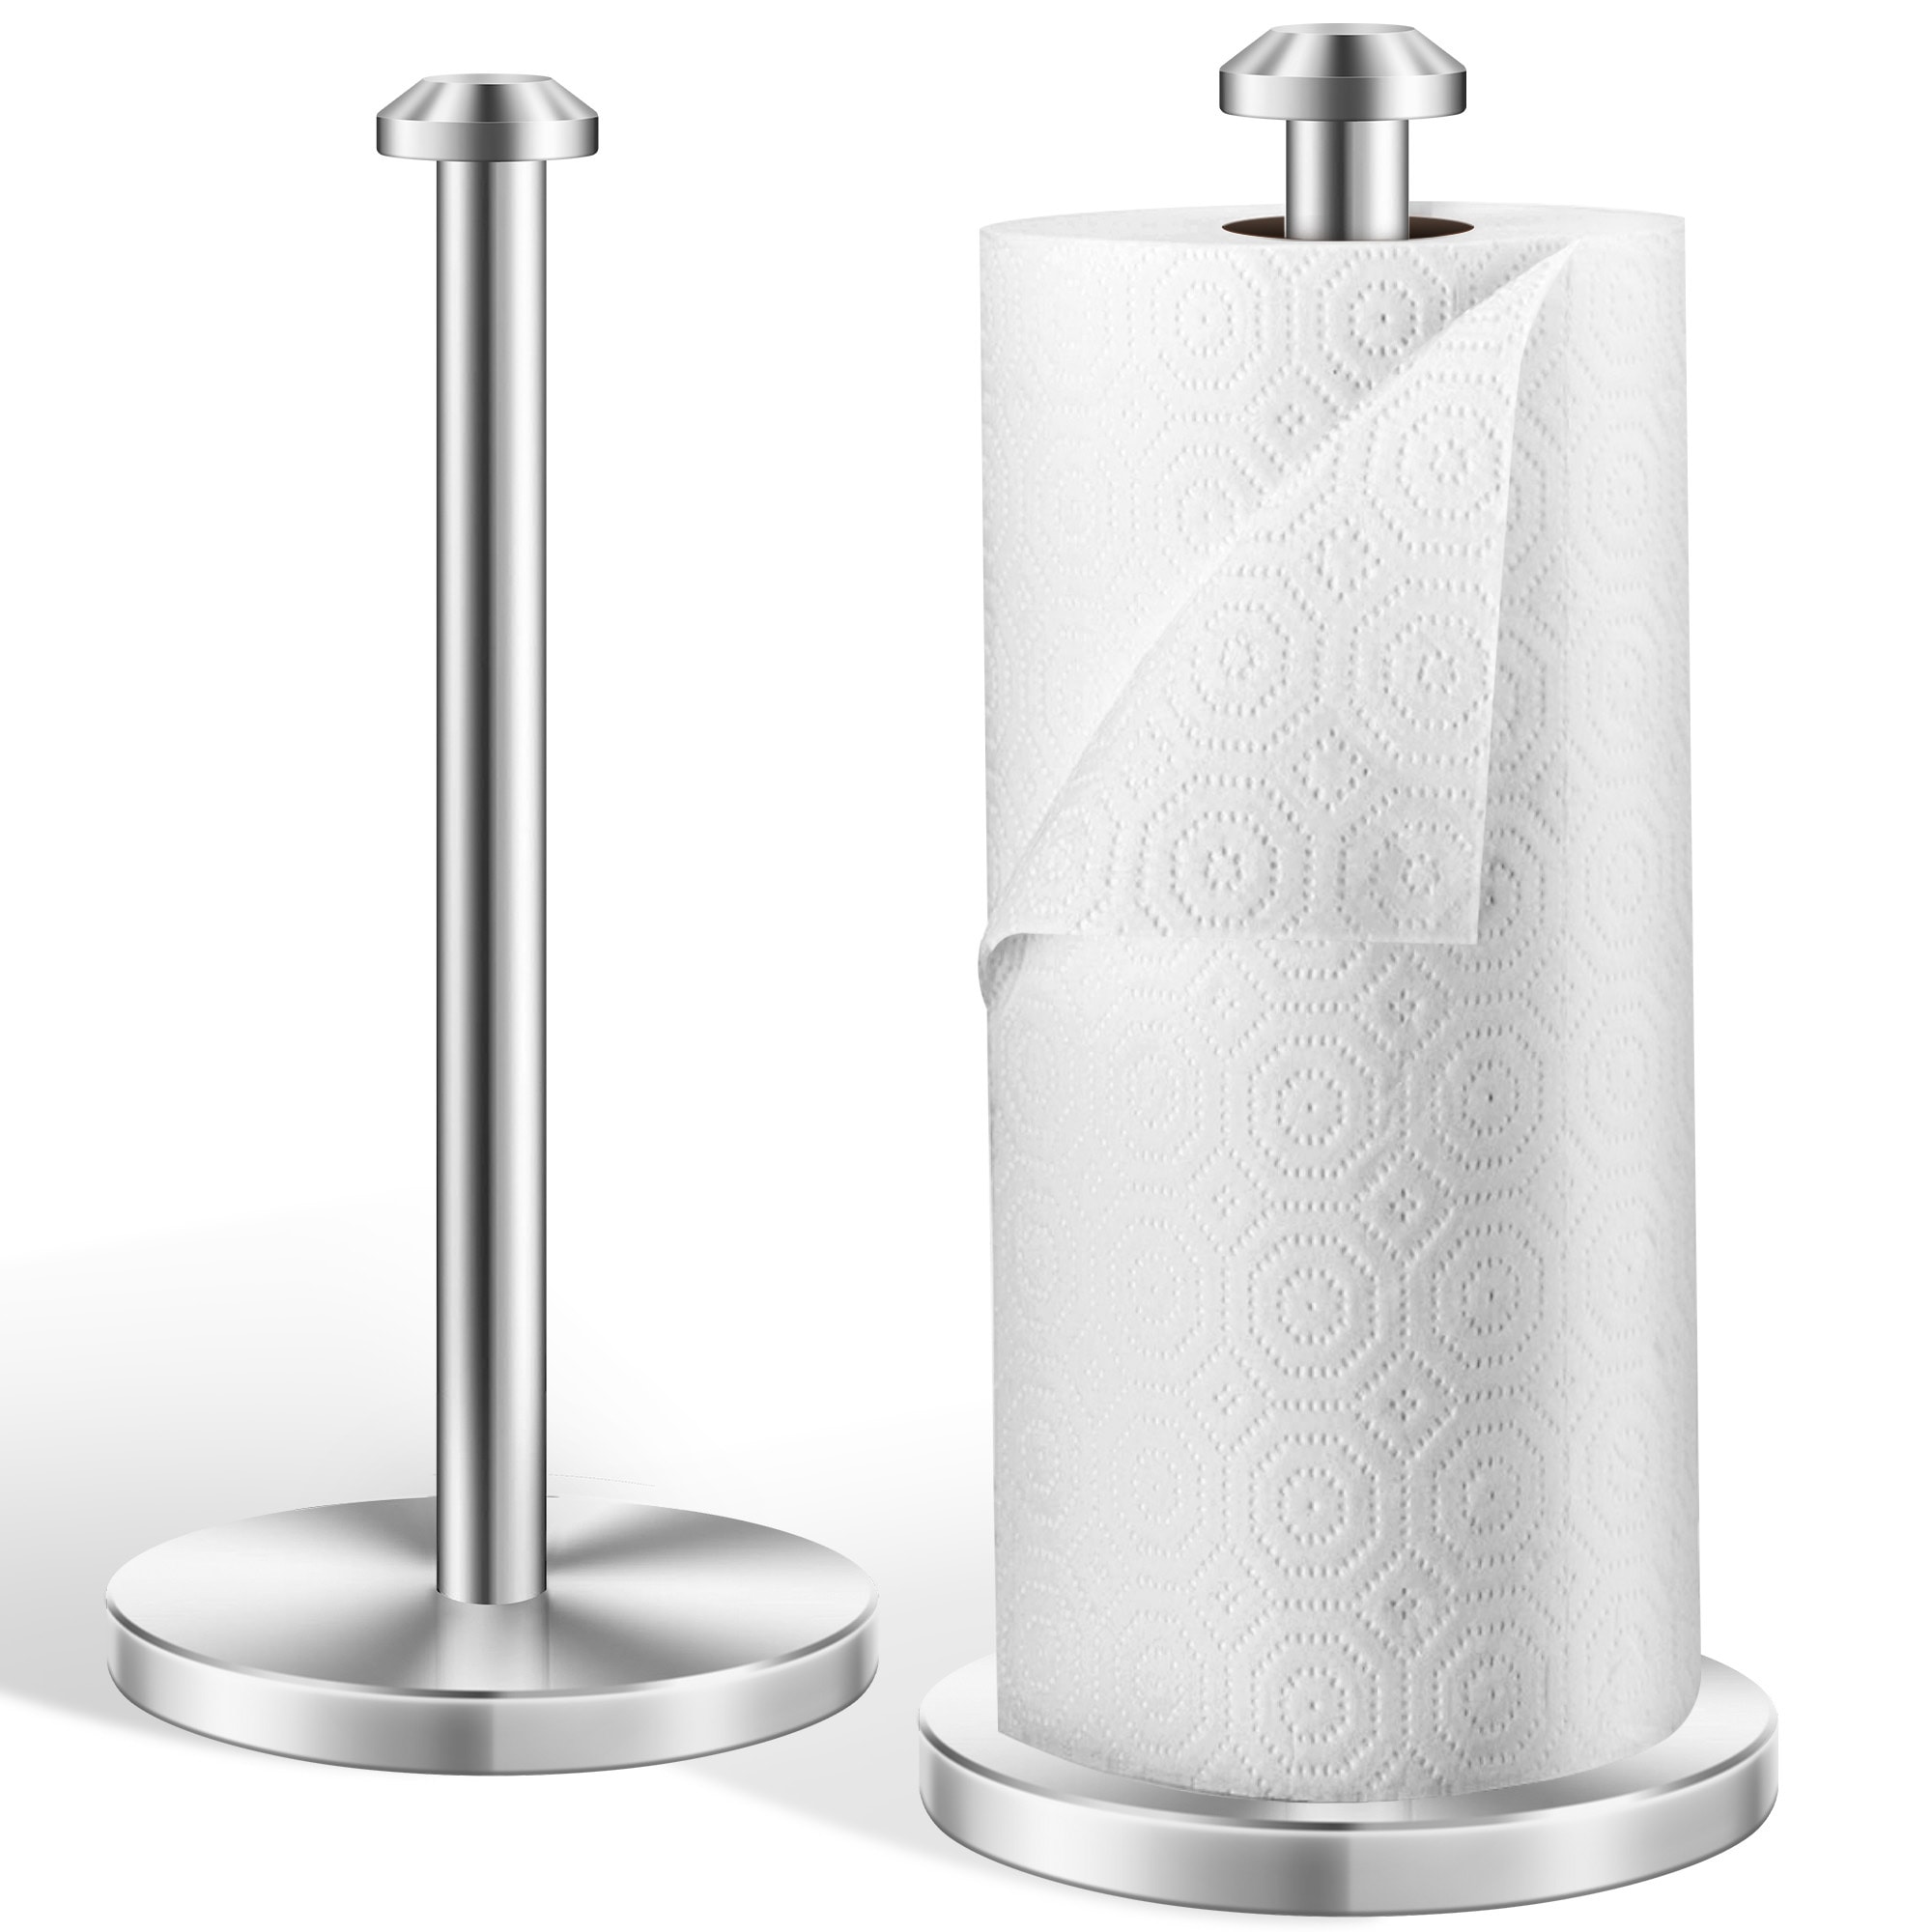 Gatco 1447 Chrome Kitchen Paper Towel Stand